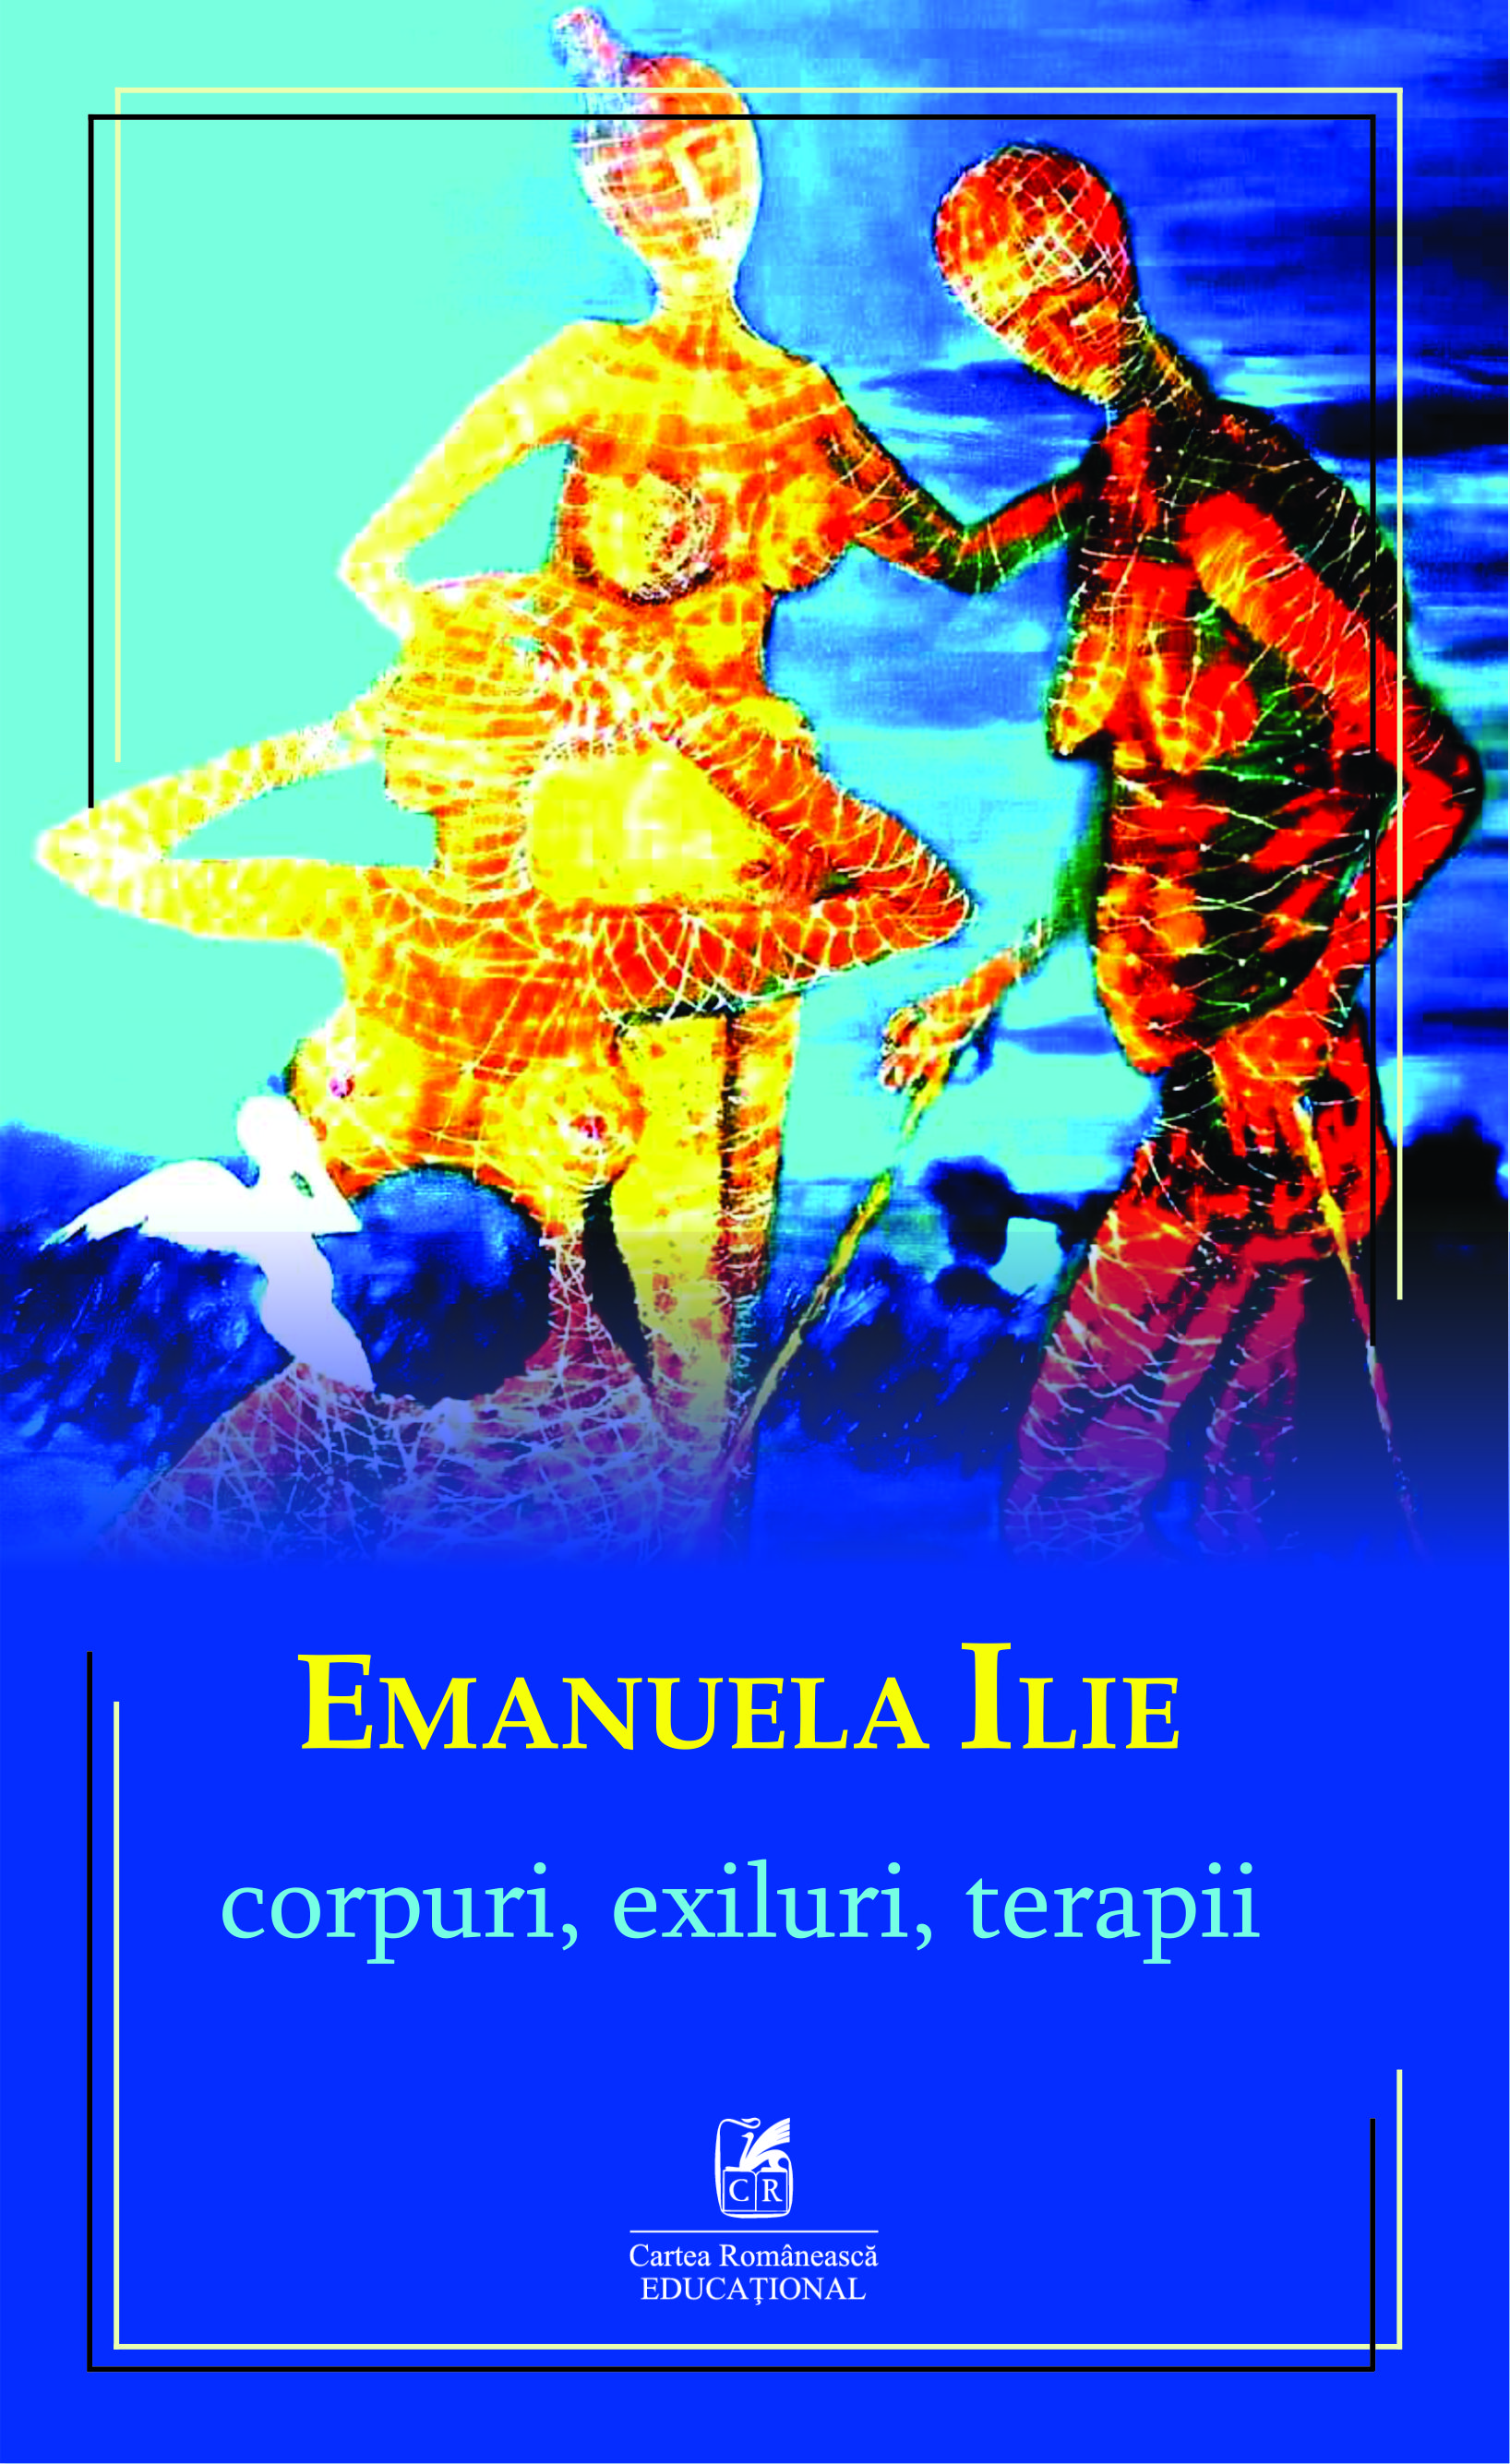 Corpuri, exiluri, terapii | Emanuela Ilie carte